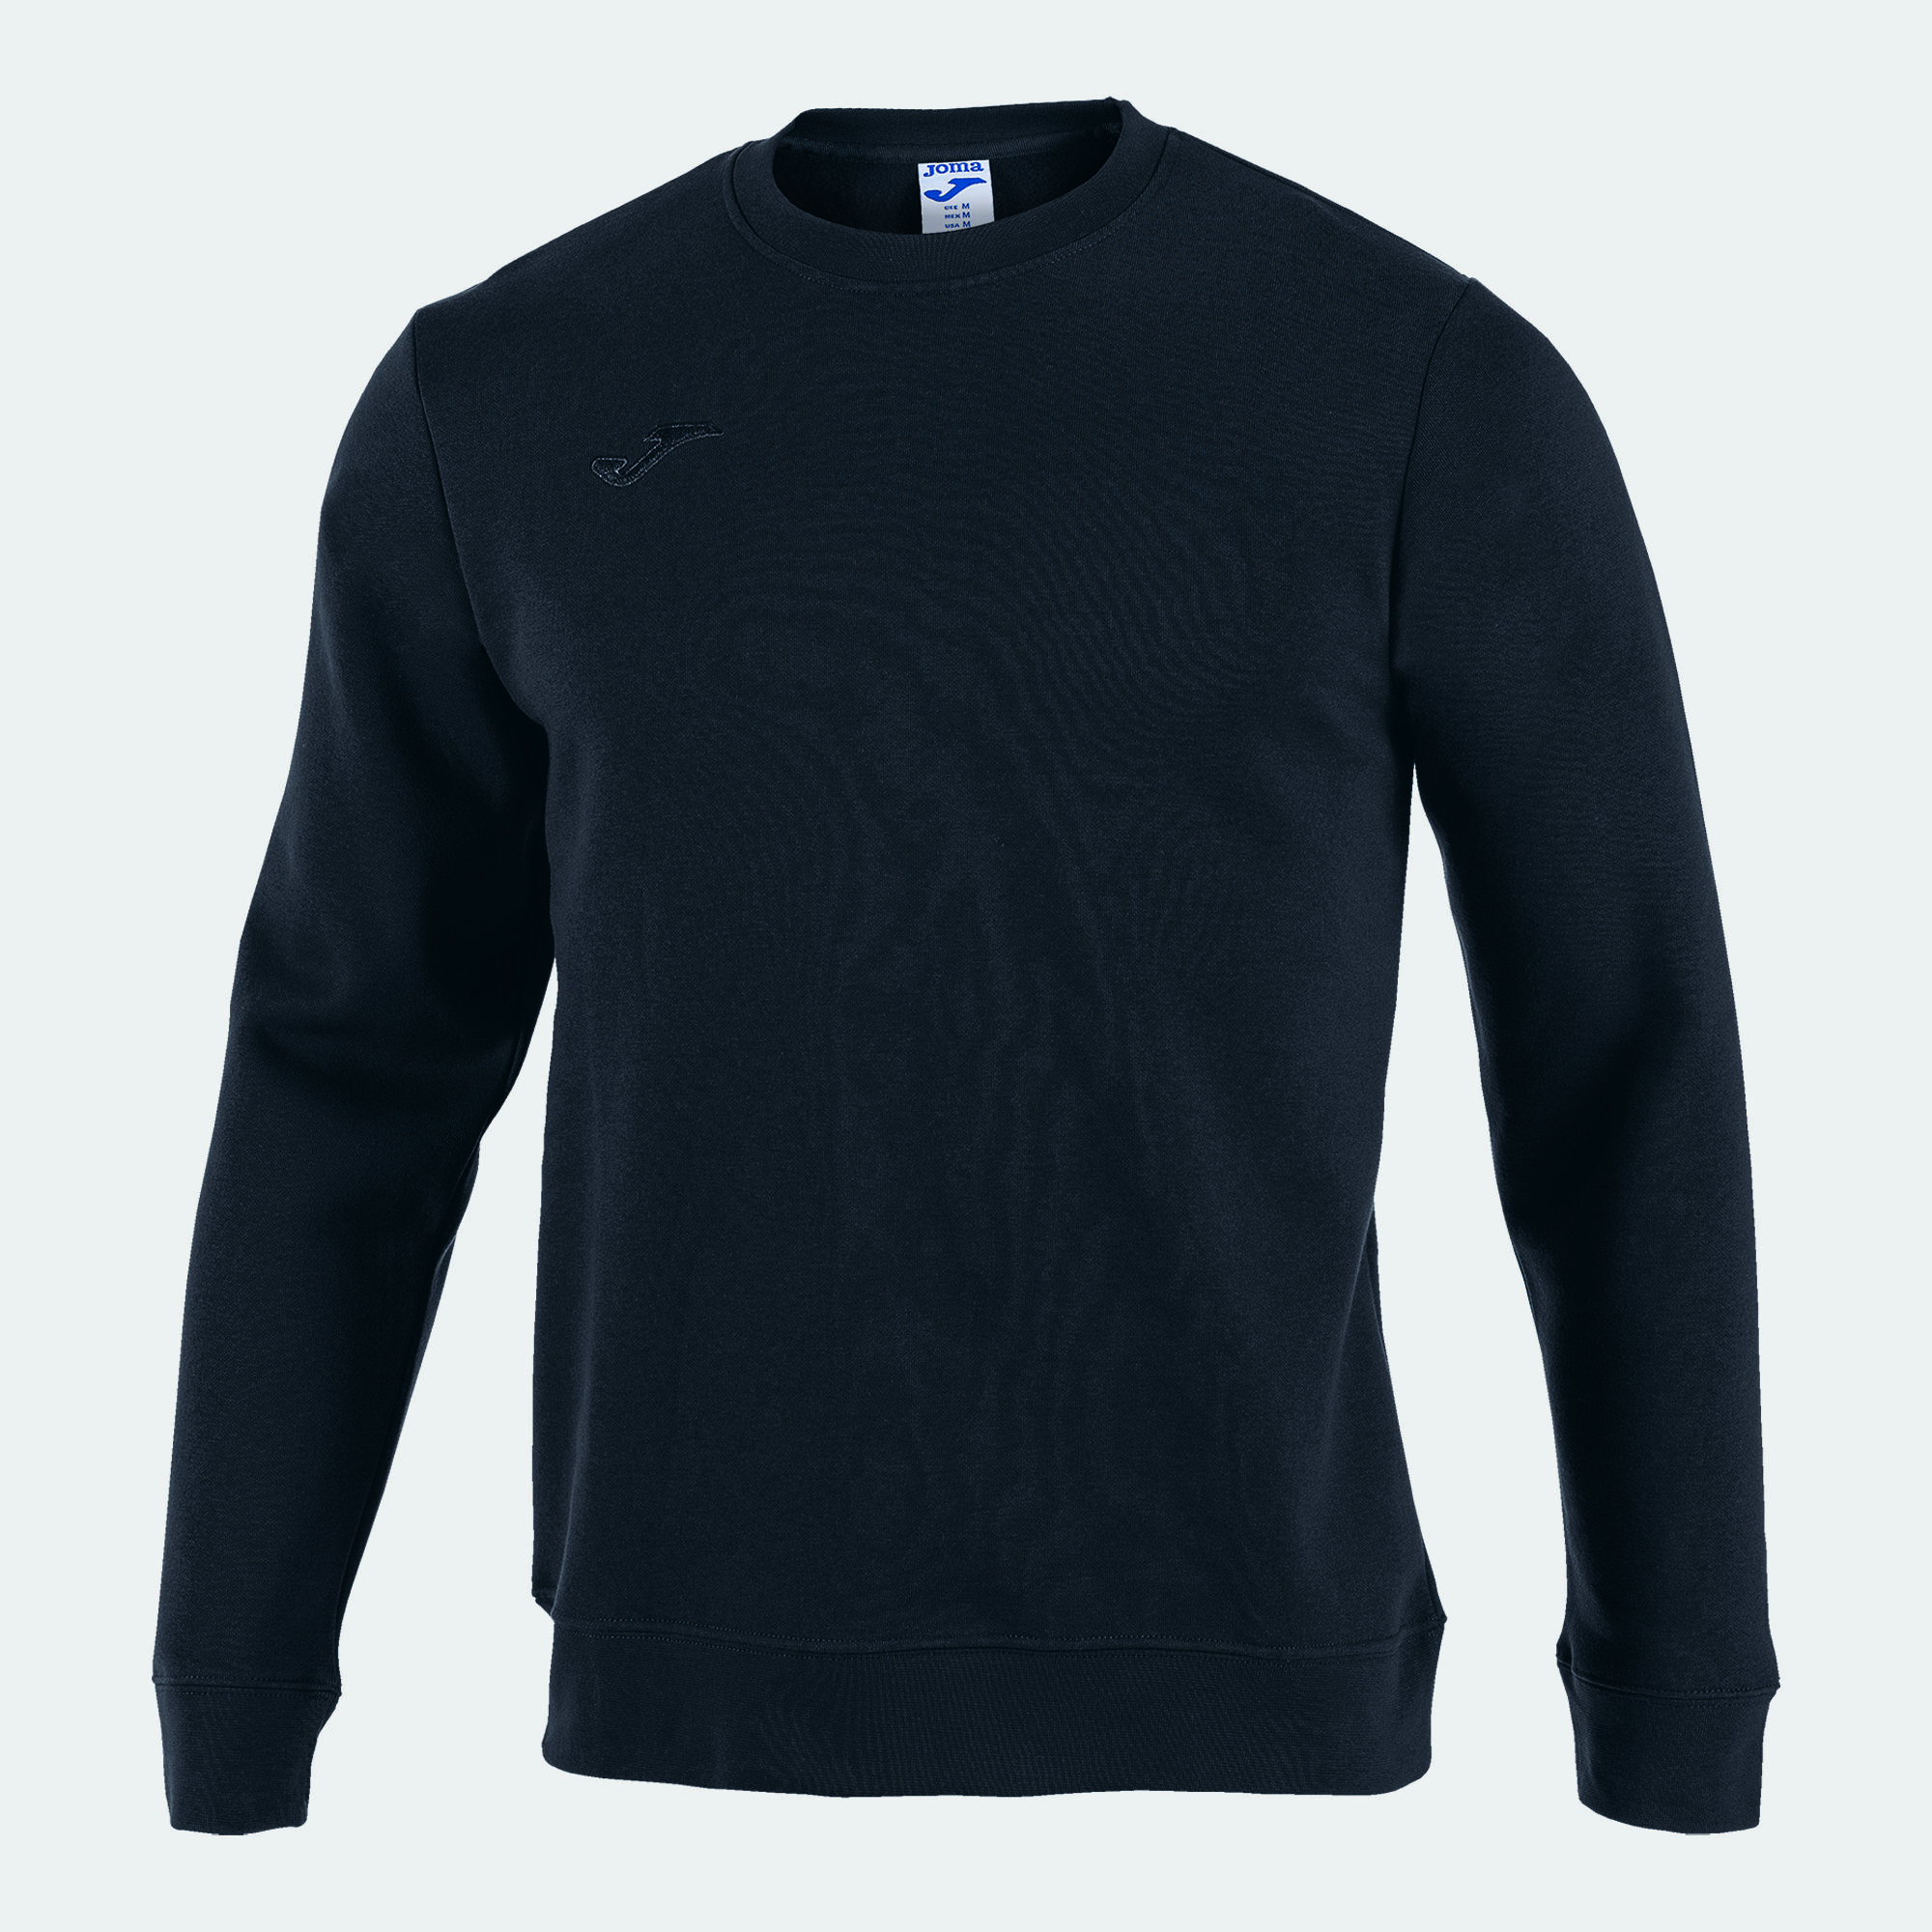 Sweat-shirt homme Santorini noir